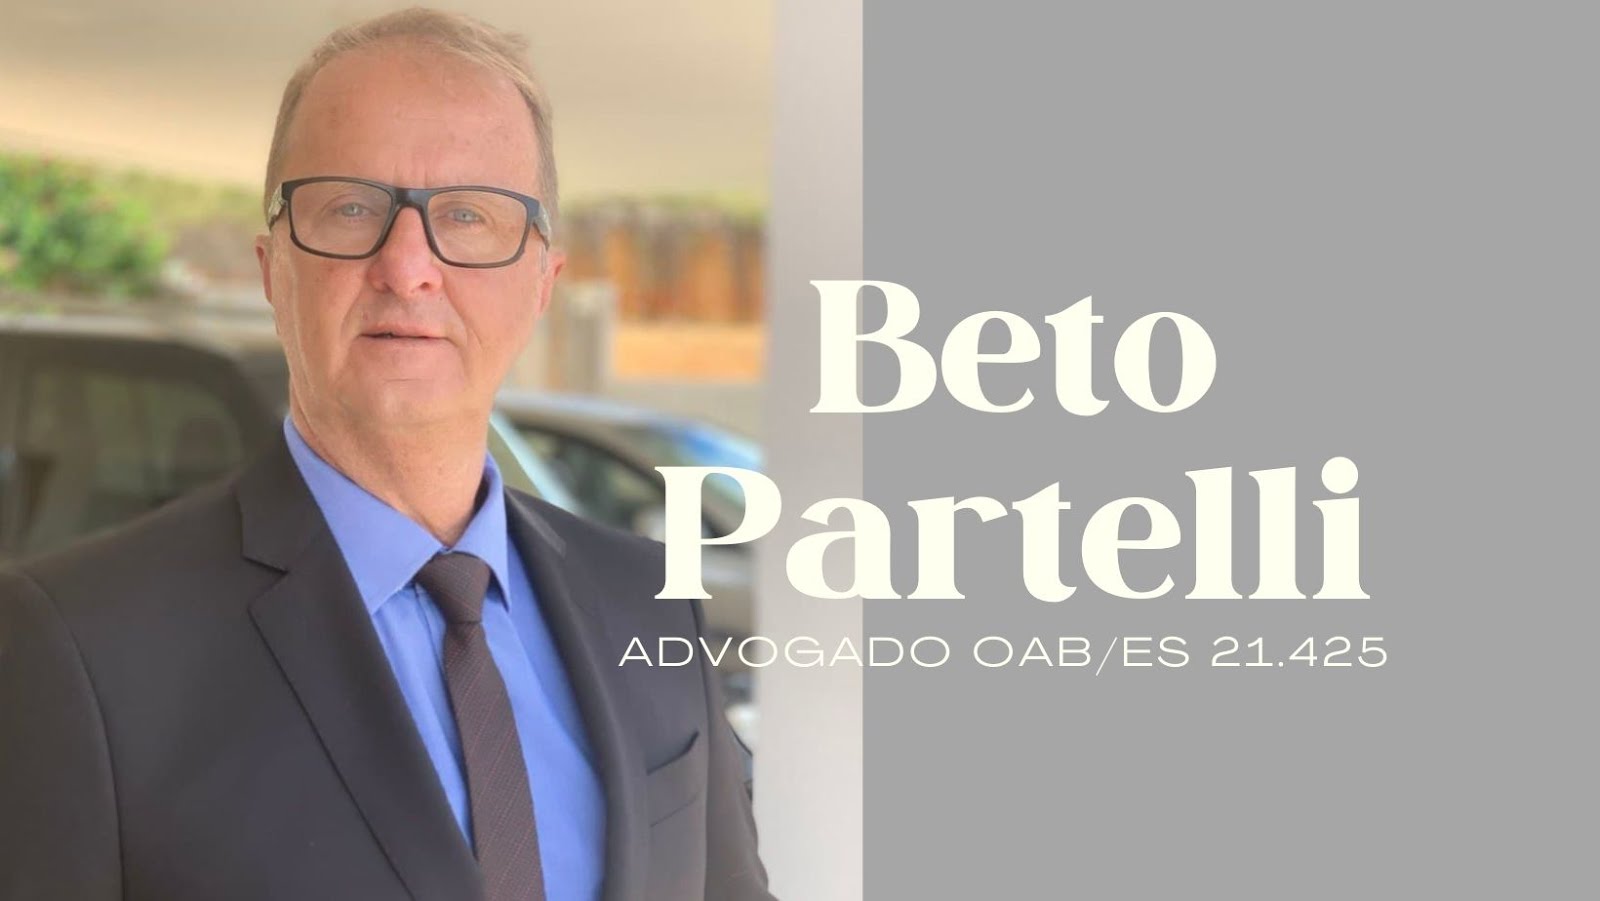 BETO PARTELLI - ADVOGADO OAB/ES 21.425